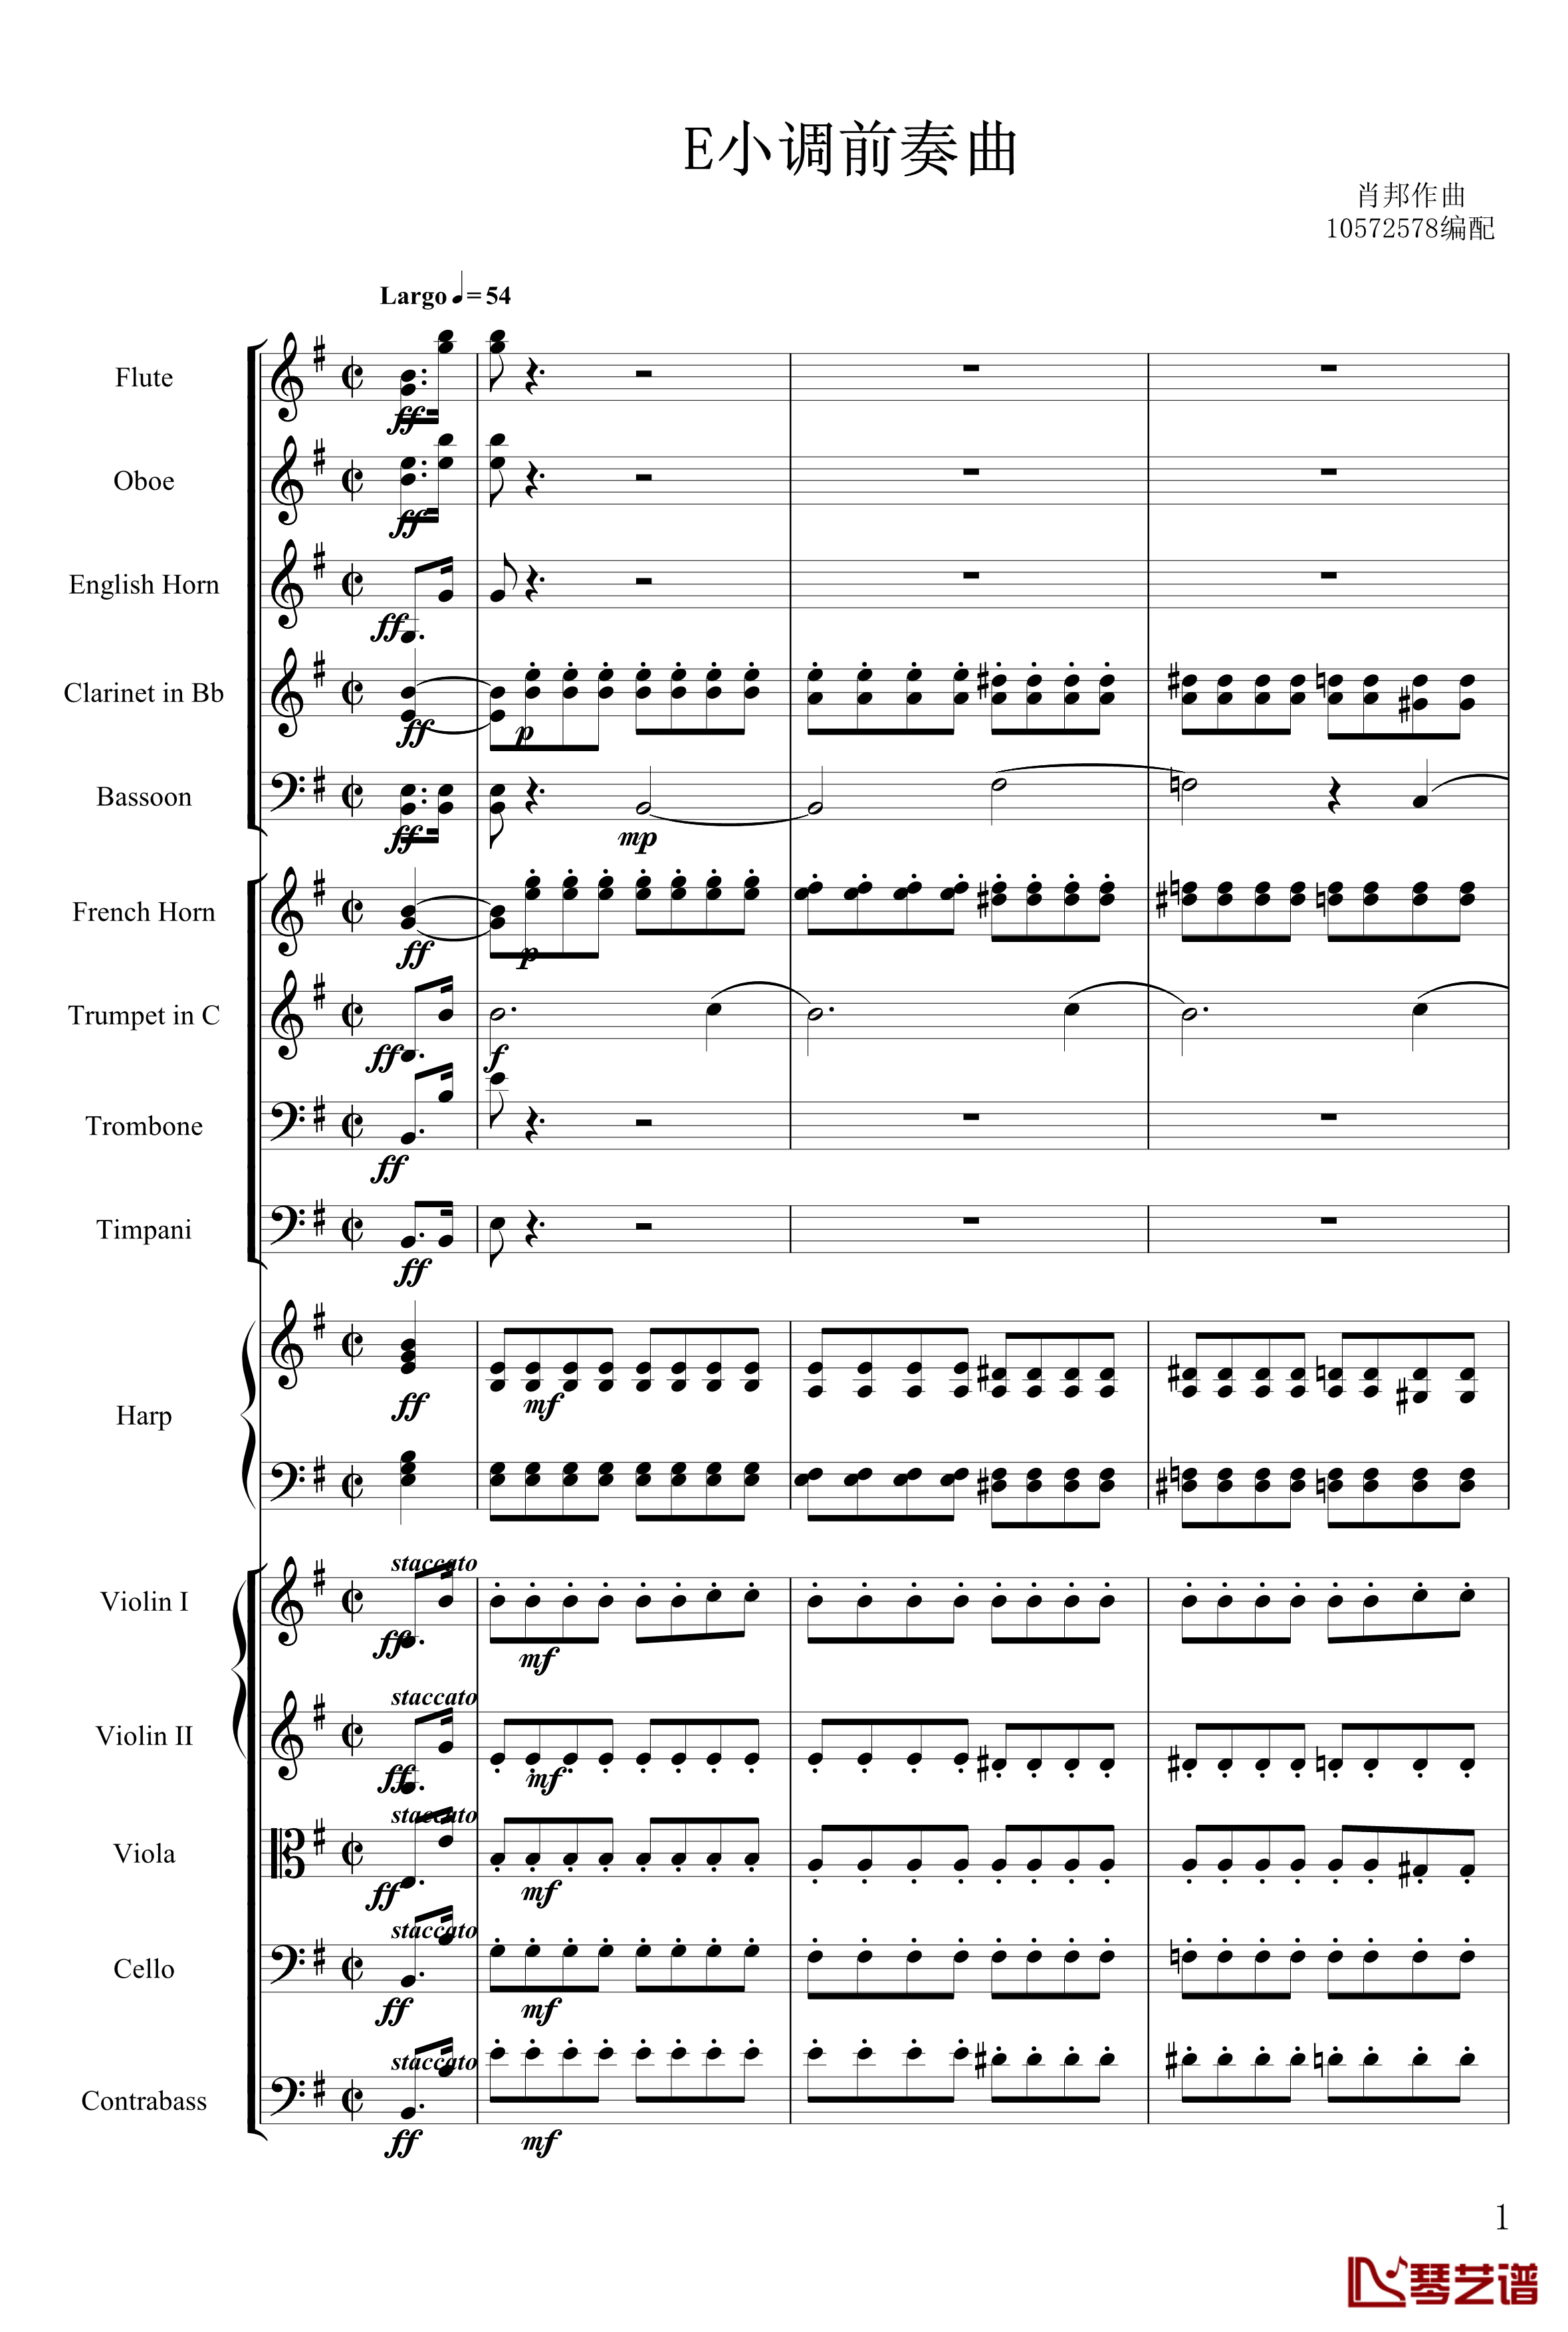 E小调前奏曲钢琴谱-交响乐版-肖邦-chopin